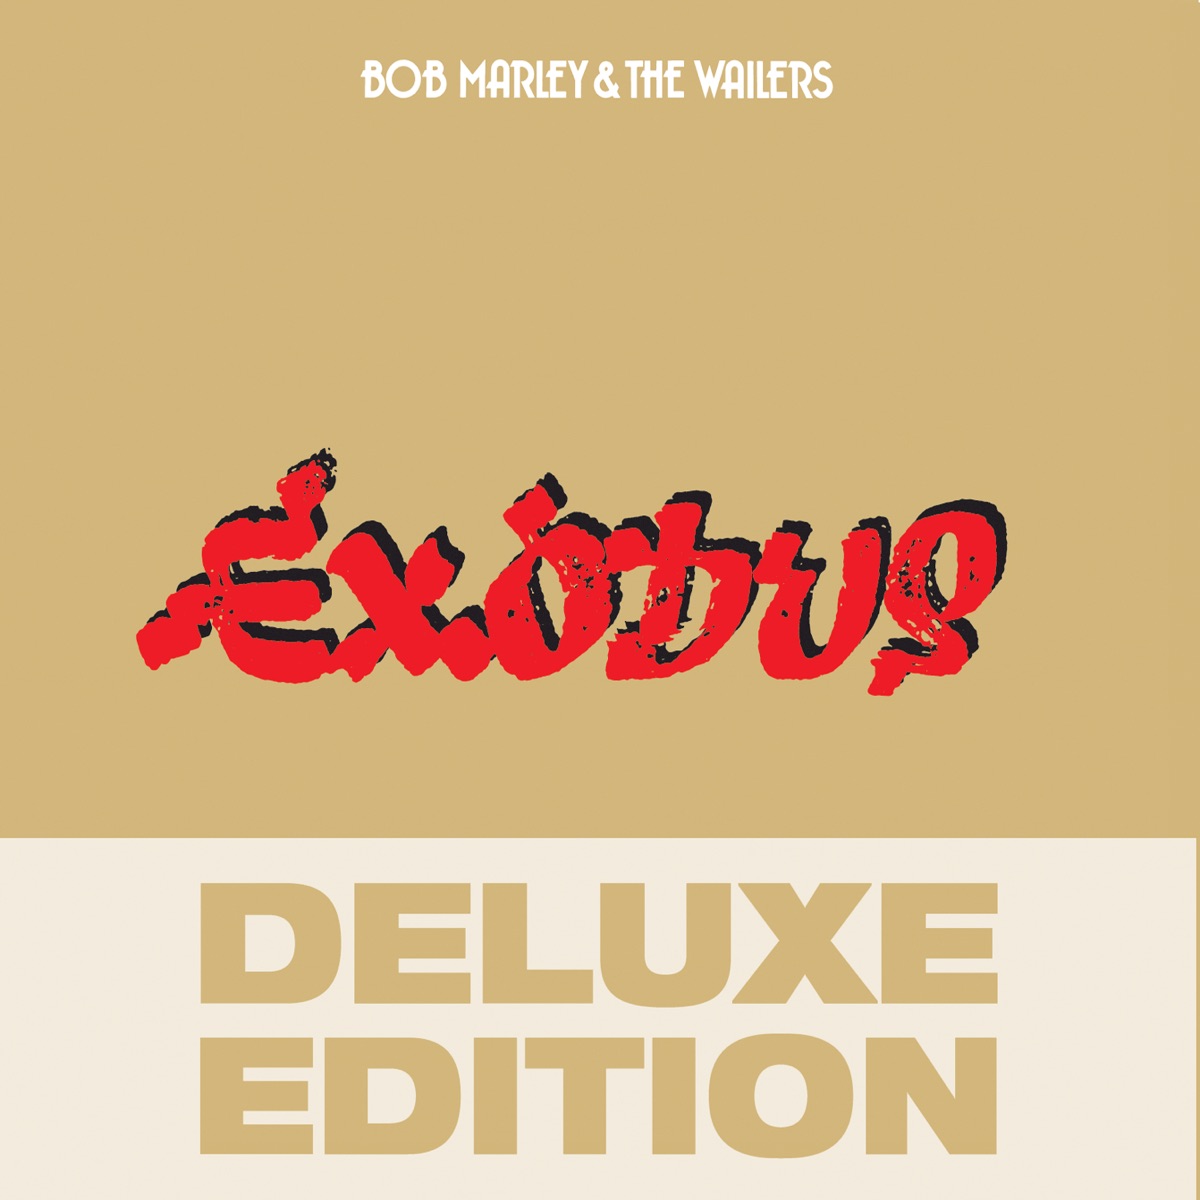 Exodus Album Cover by Bob Marley & The Wailers1200 x 1200